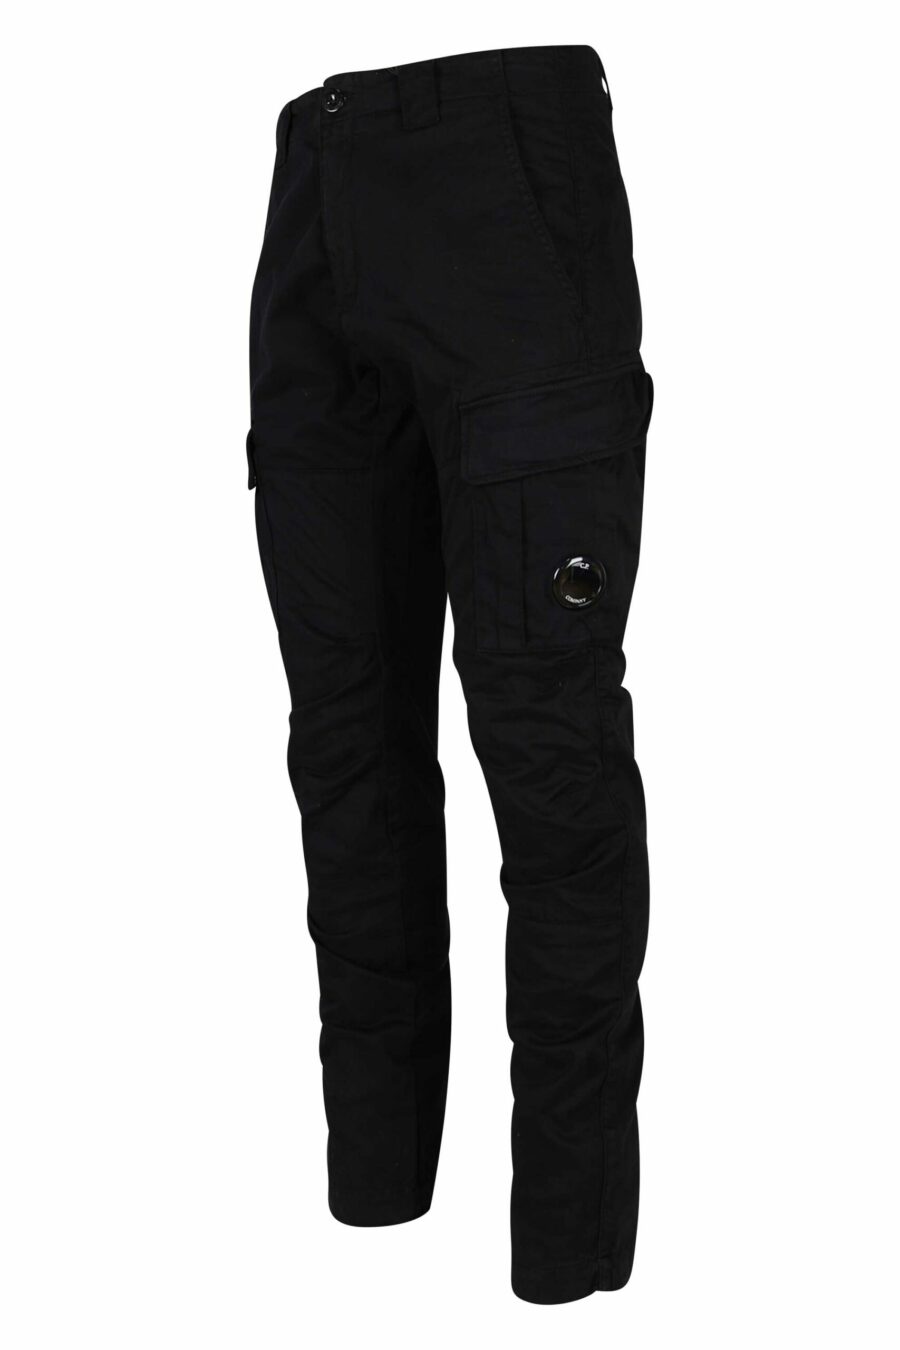 Pantalon cargo noir en satin stretch et logo lens - 7620943597585 1 1 scaled